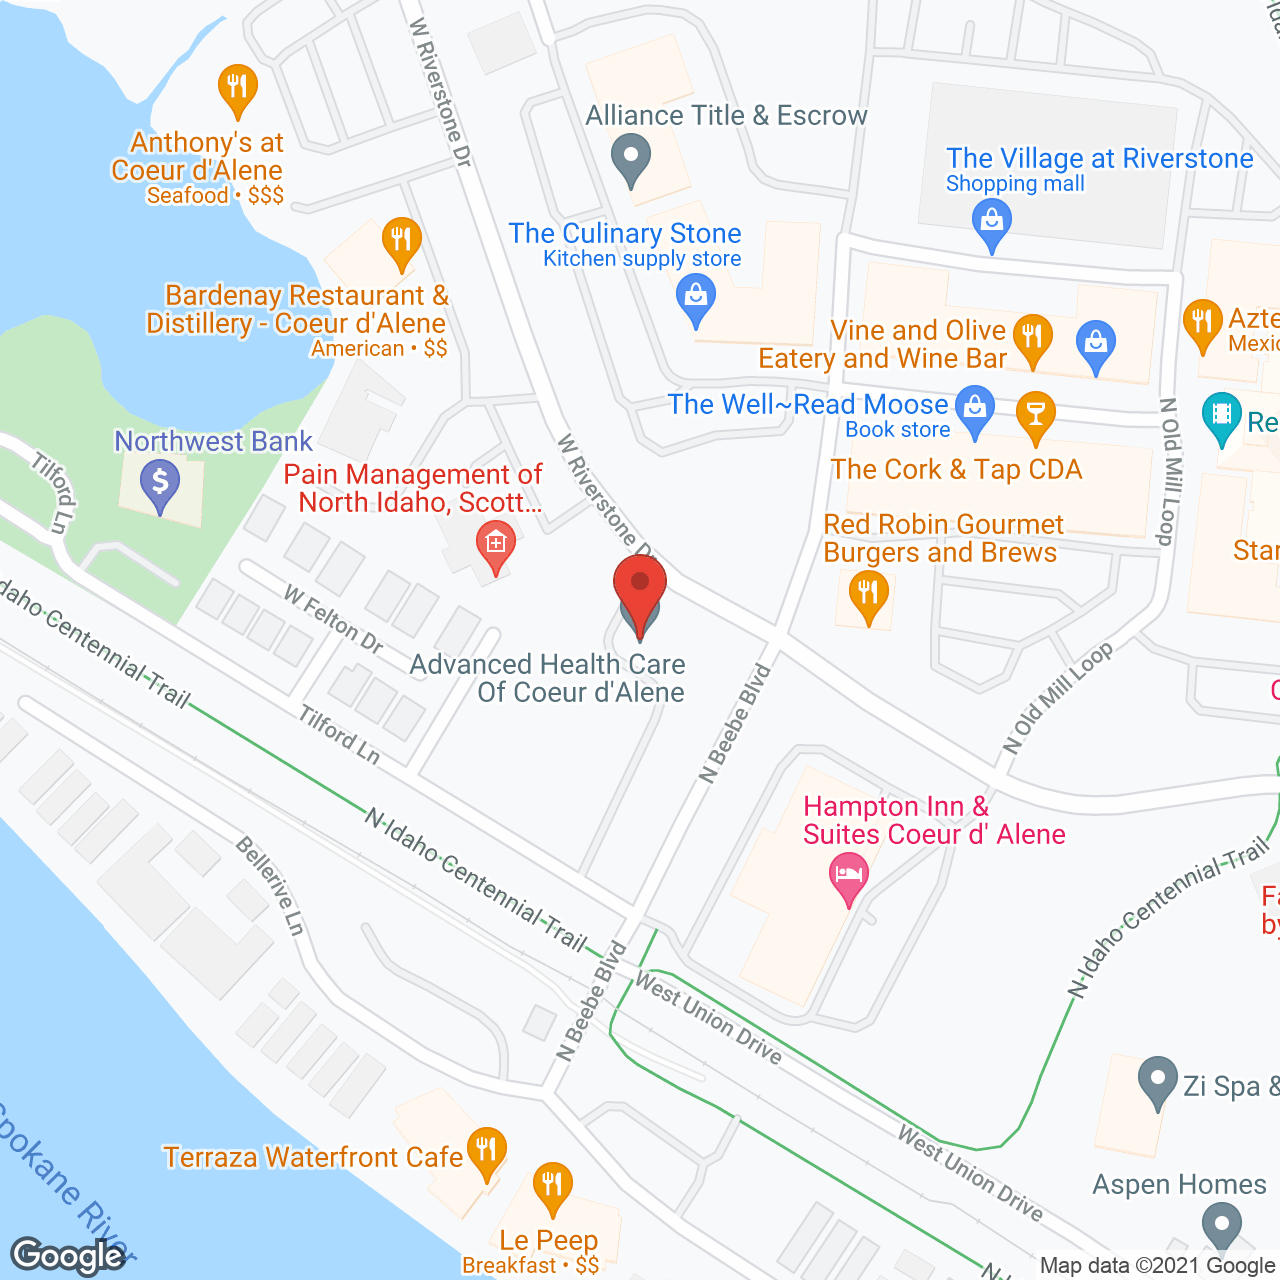 Advanced Health Care Of Coeur Dalene in google map